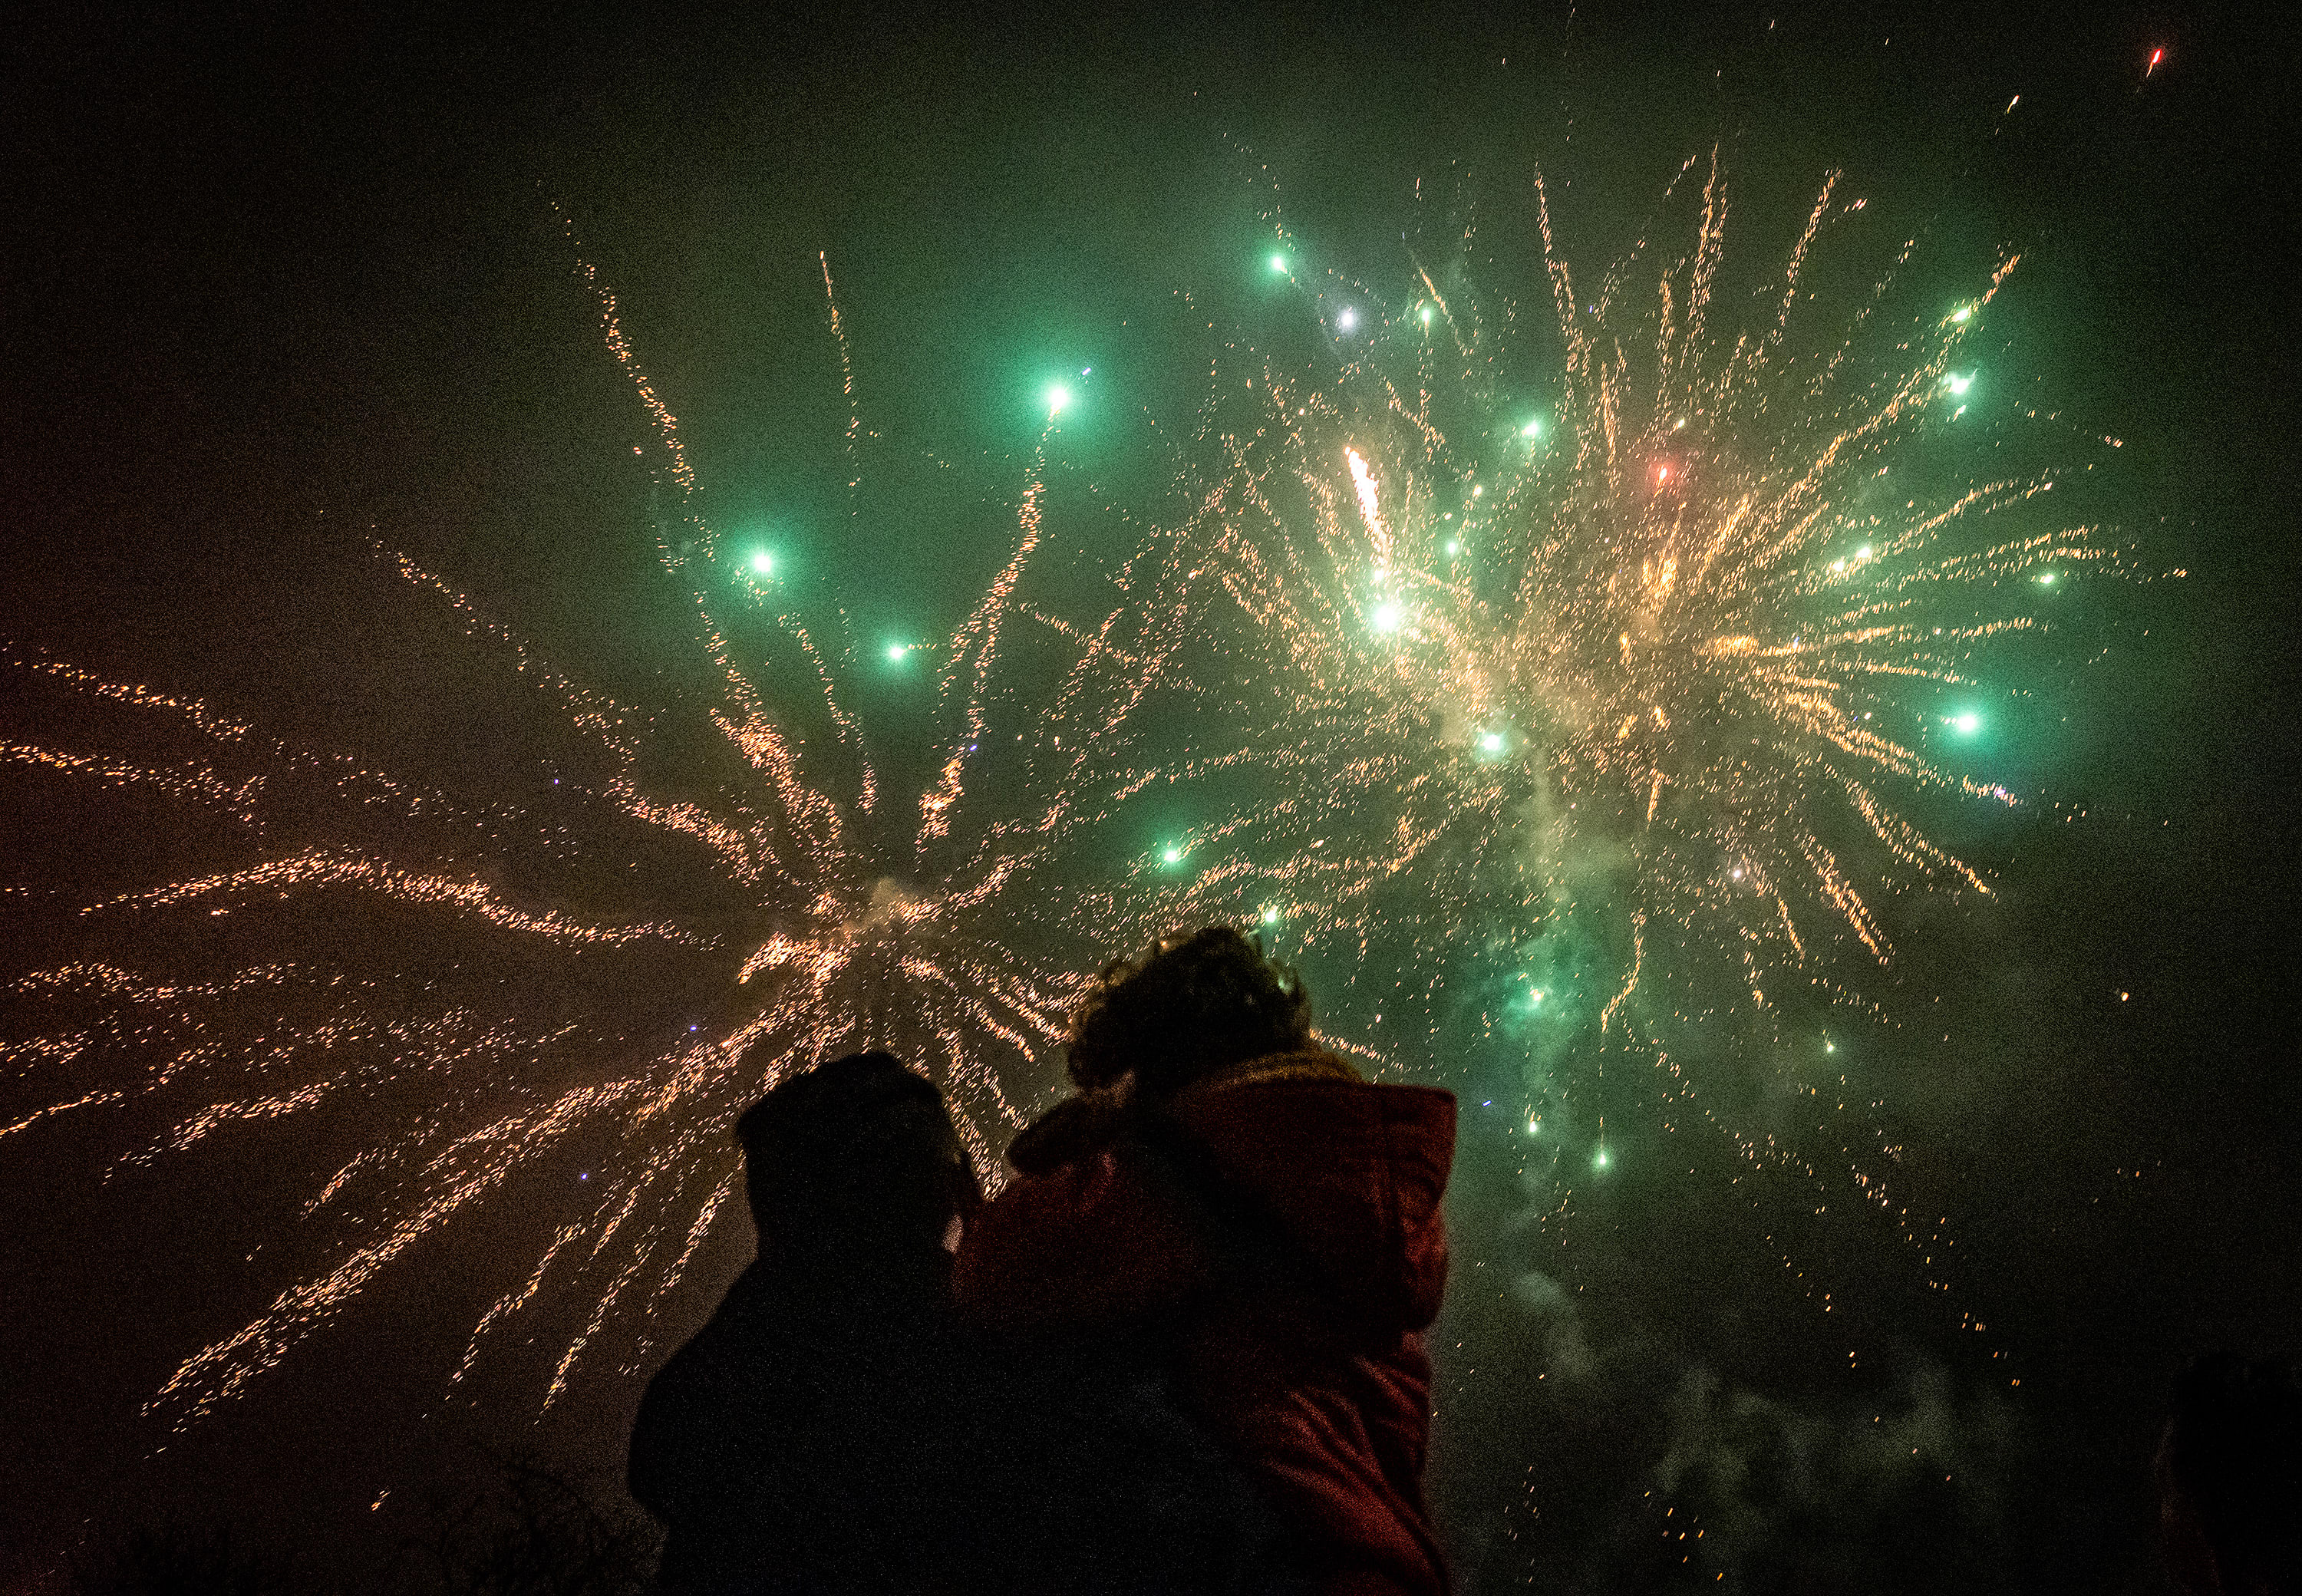 Nederland knalt na twee jaarwisselingen met vuurwerkverbod weer ouderwets het nieuwe jaar in